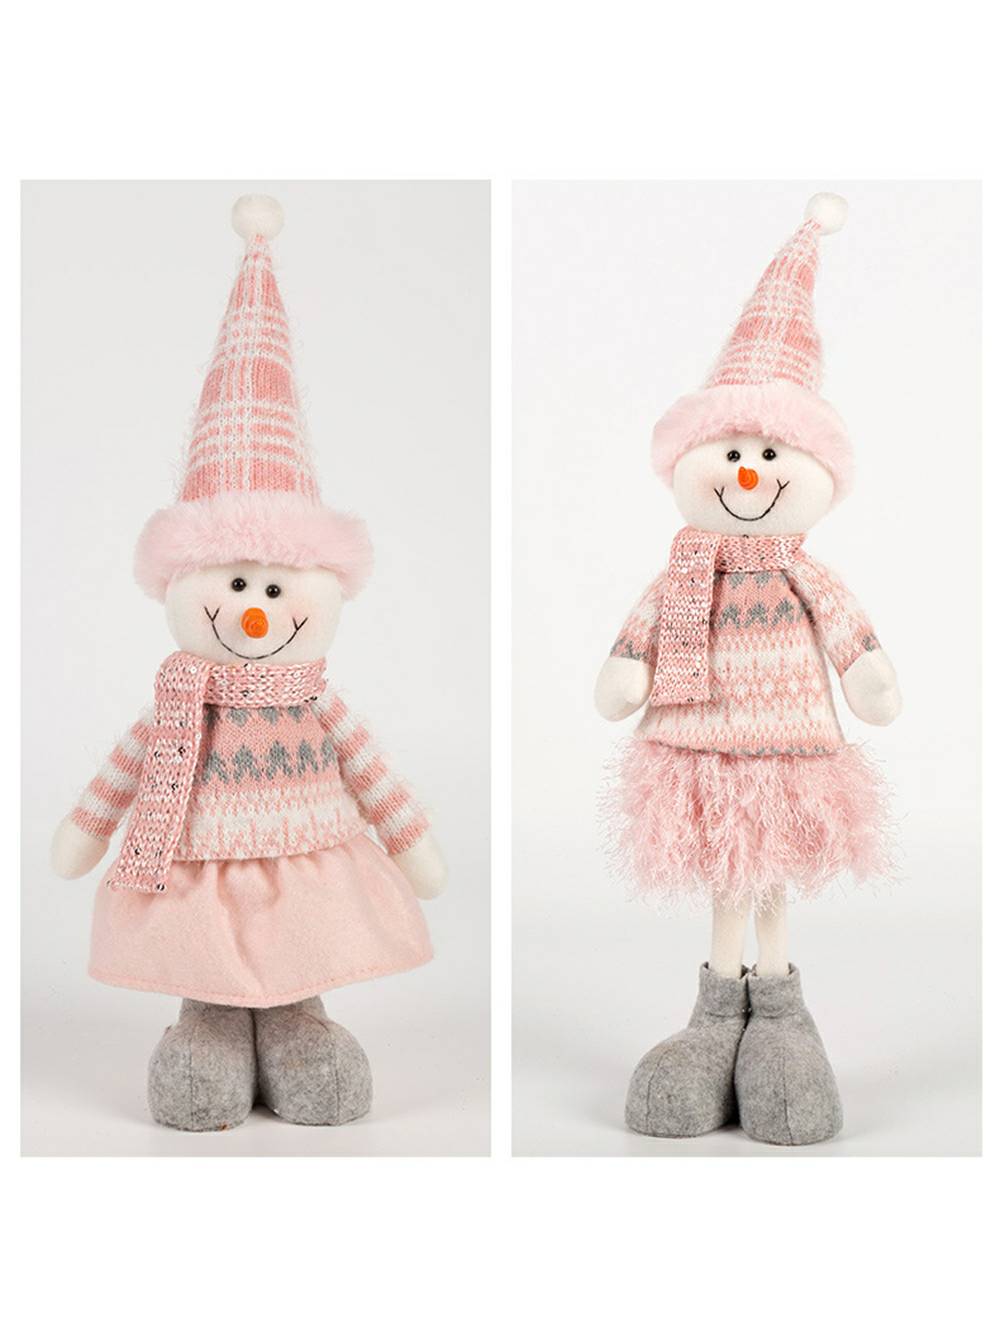 Barbie natalizia in peluche rosa con renna elfo e pupazzo di neve Rudolph